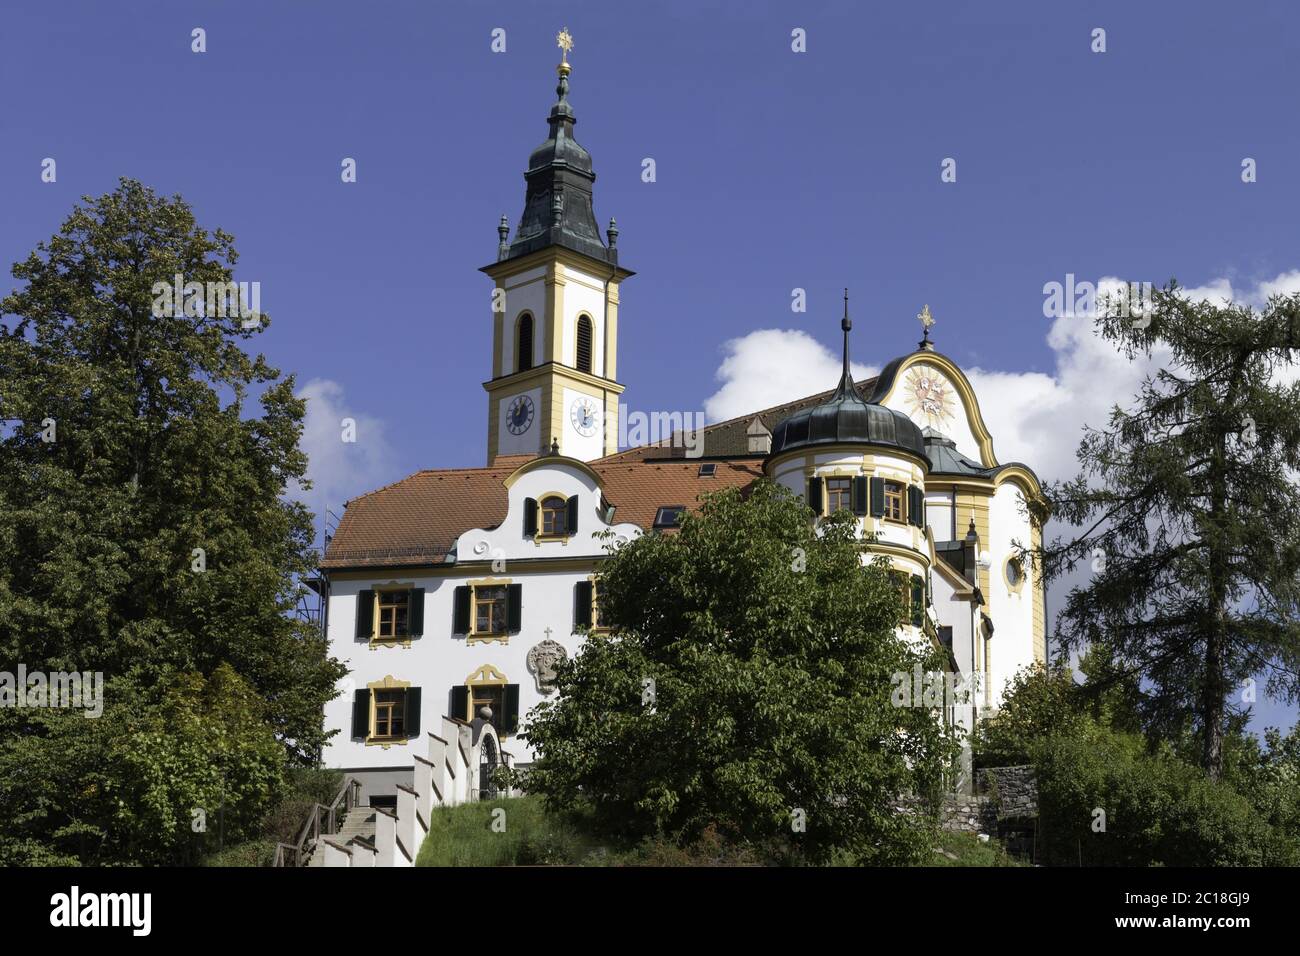 Cross mountain church and cloister Pleystein, Upper Palatinate, Bavaria, Germany Stock Photo